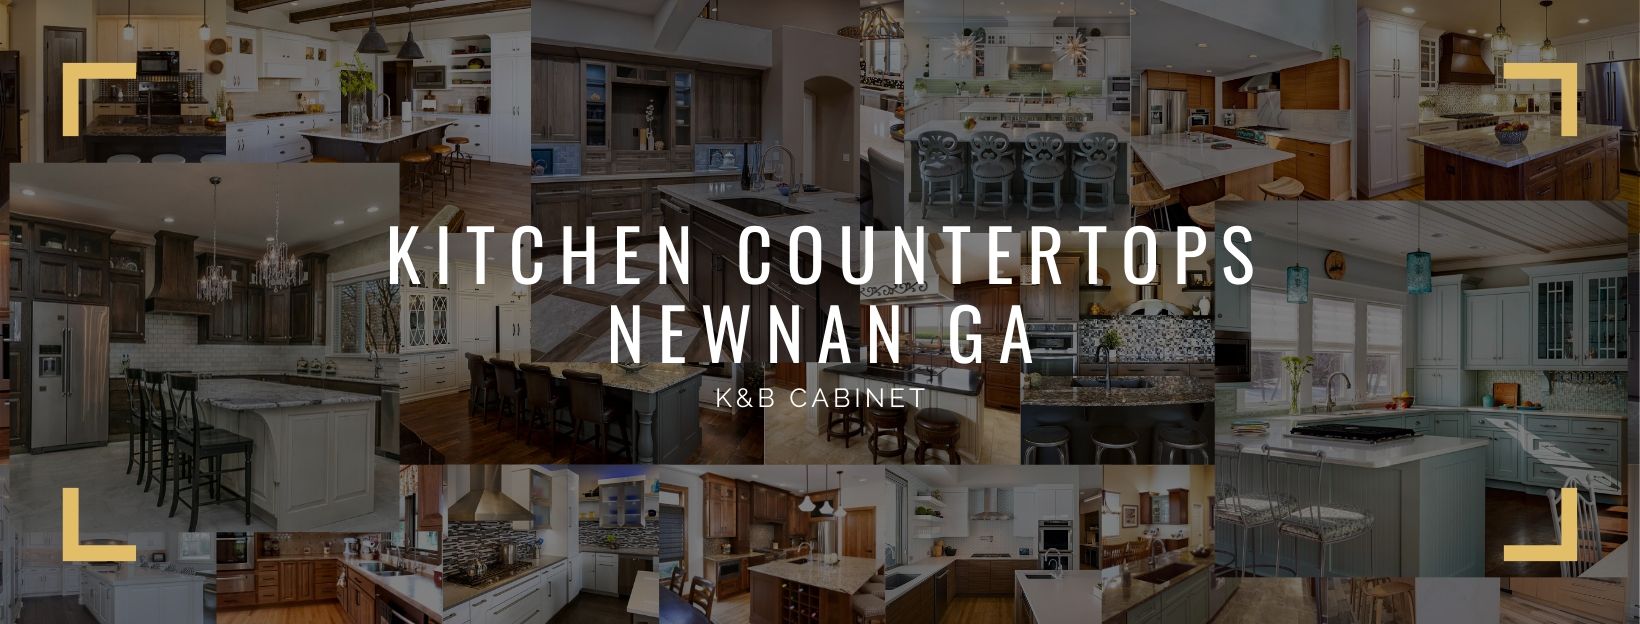 Kitchen Countertops Newnan GA